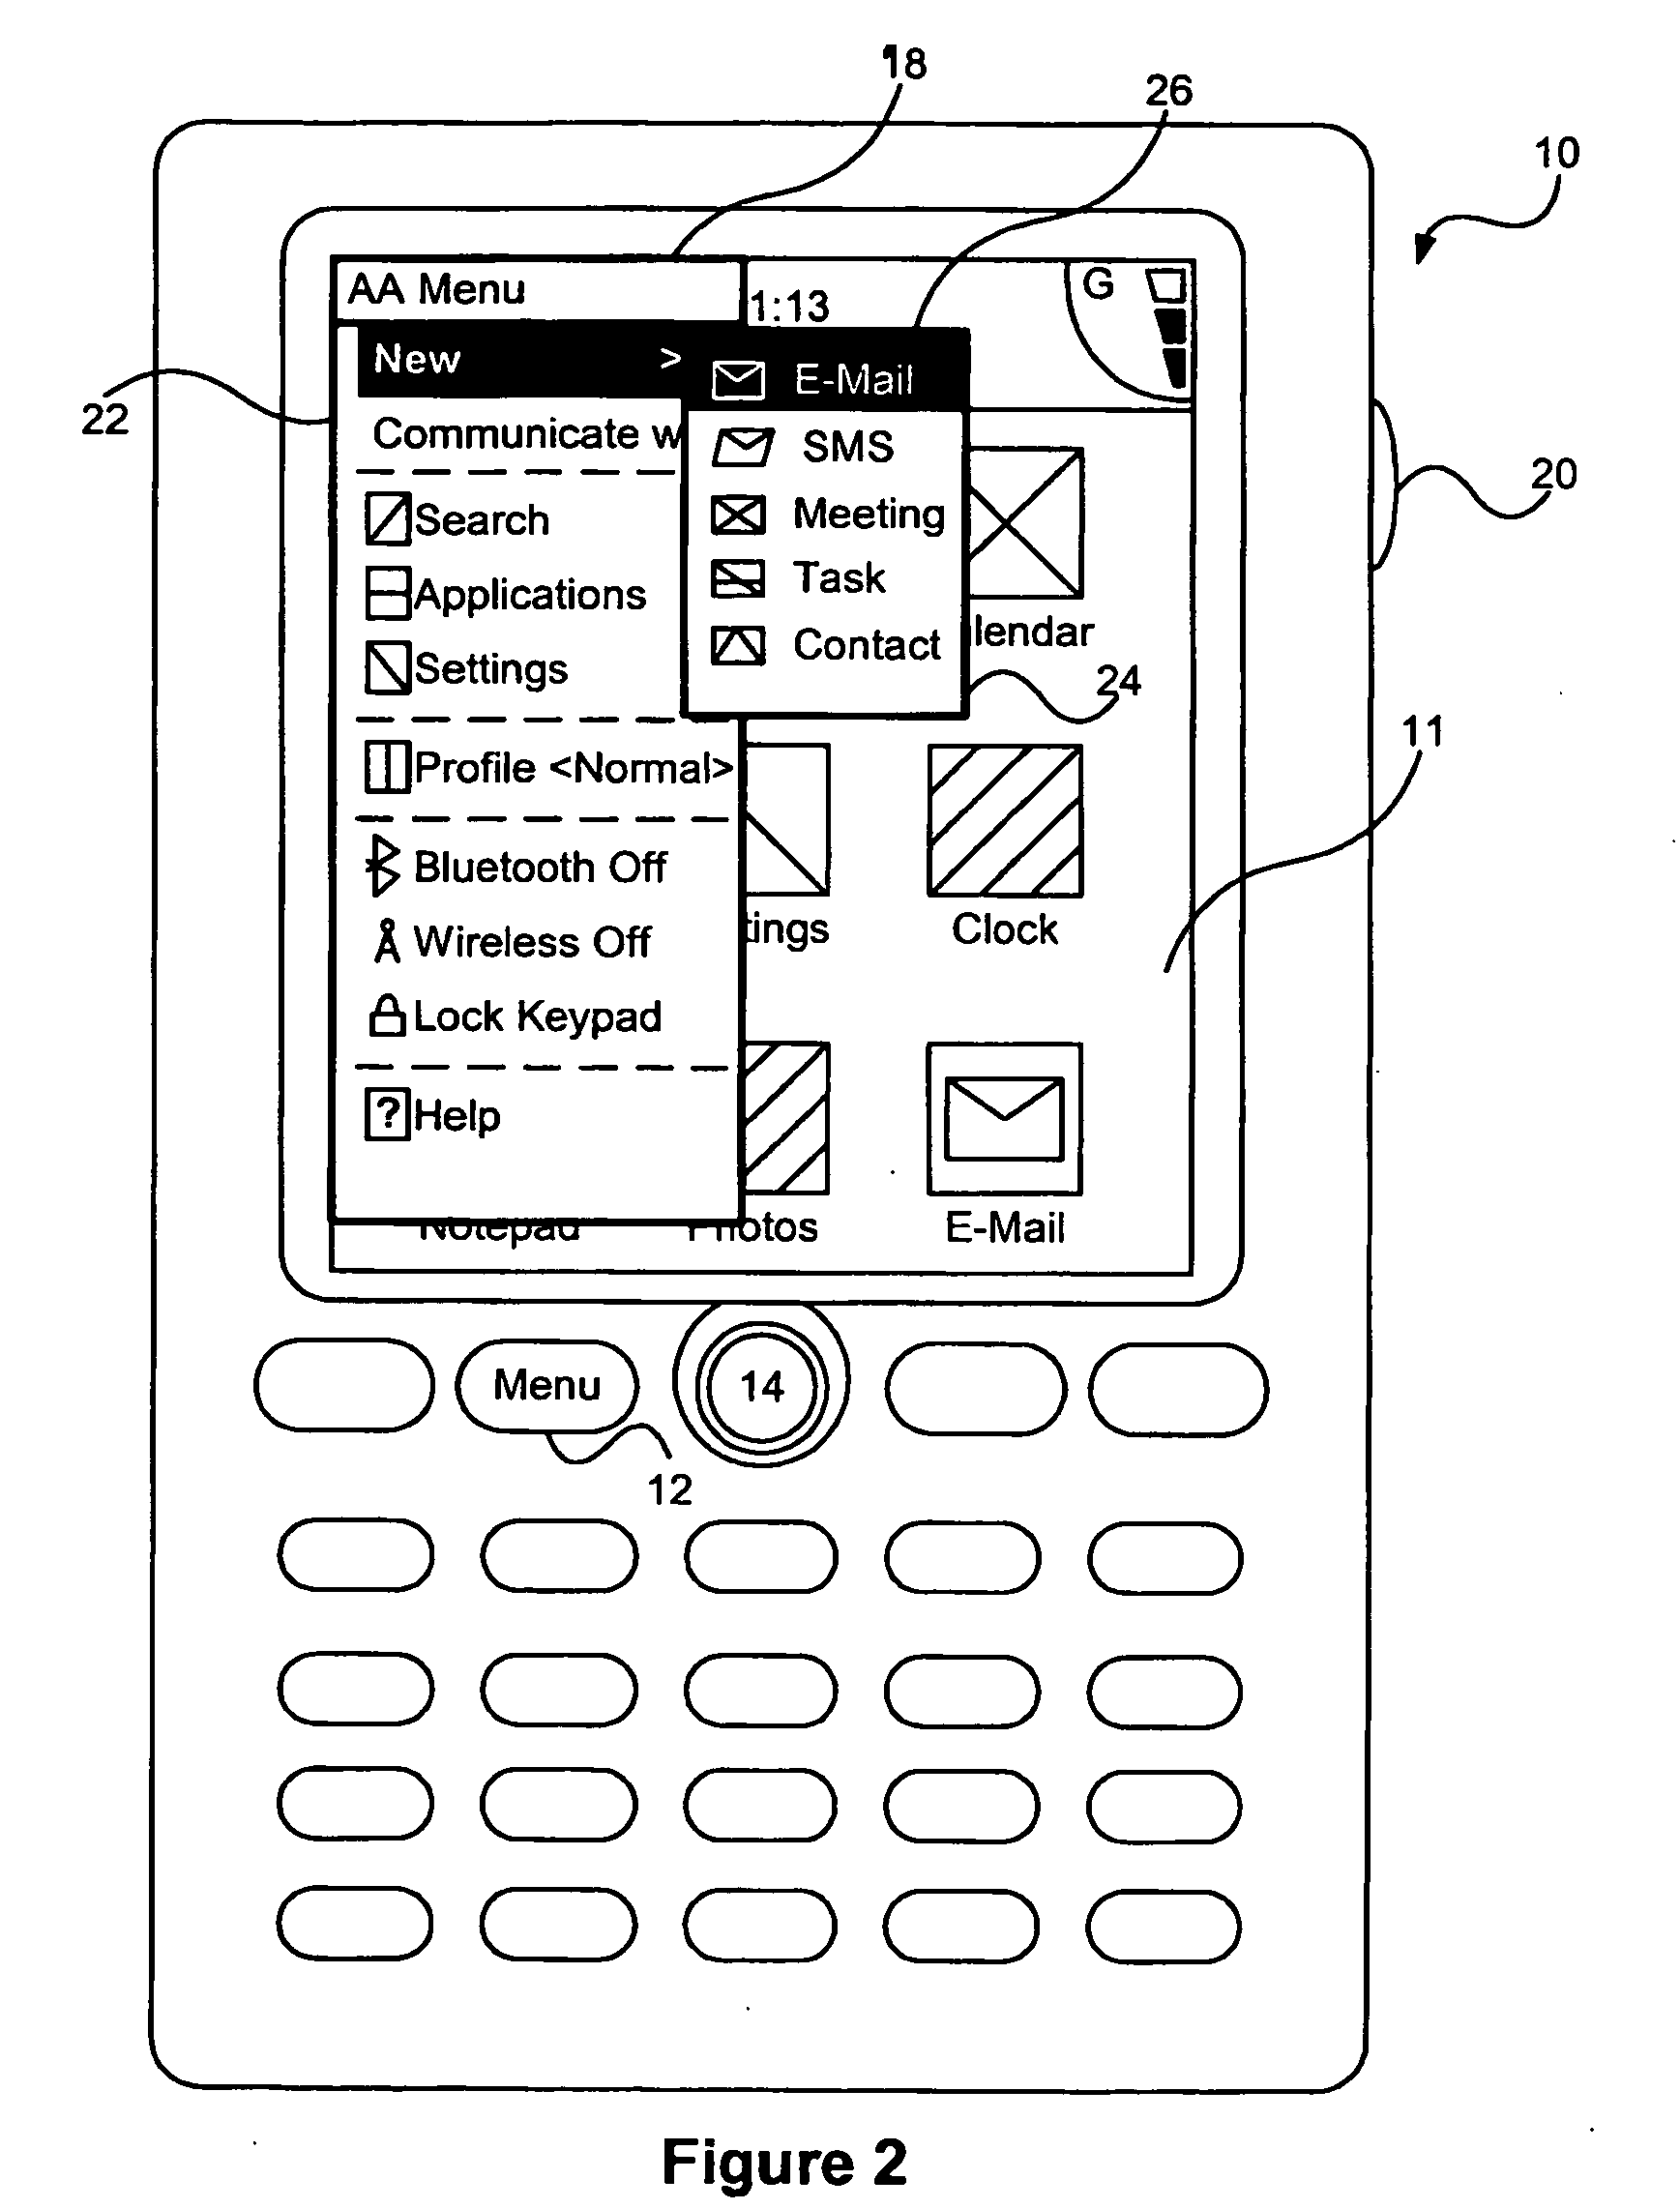 Edit menu for a mobile communication device